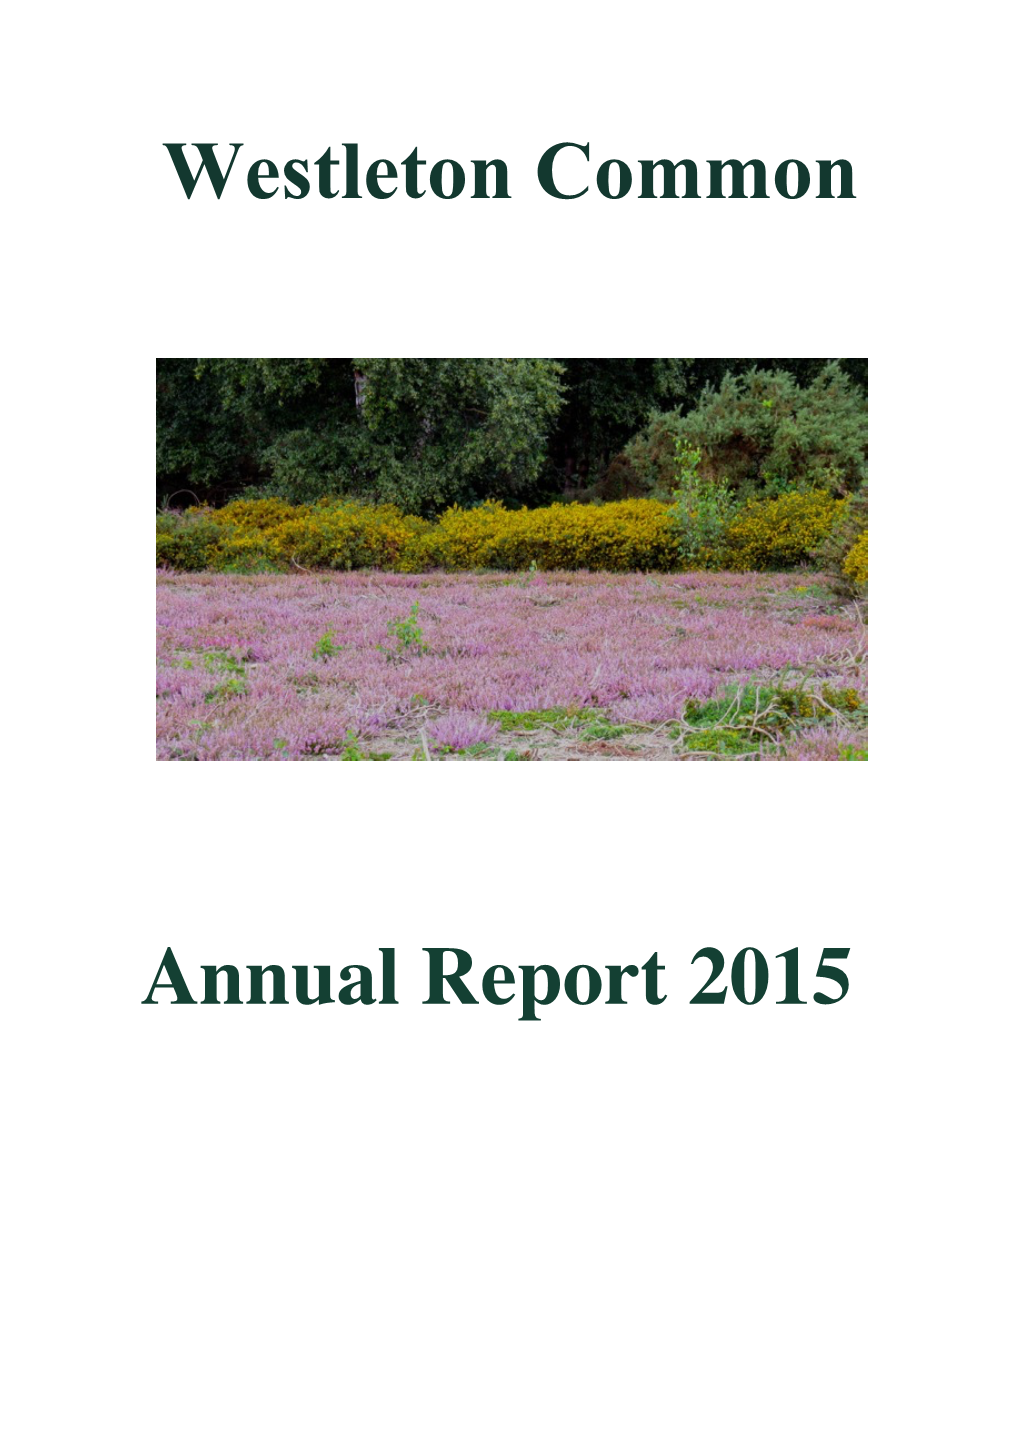 Westleton Common Annual Report 2015